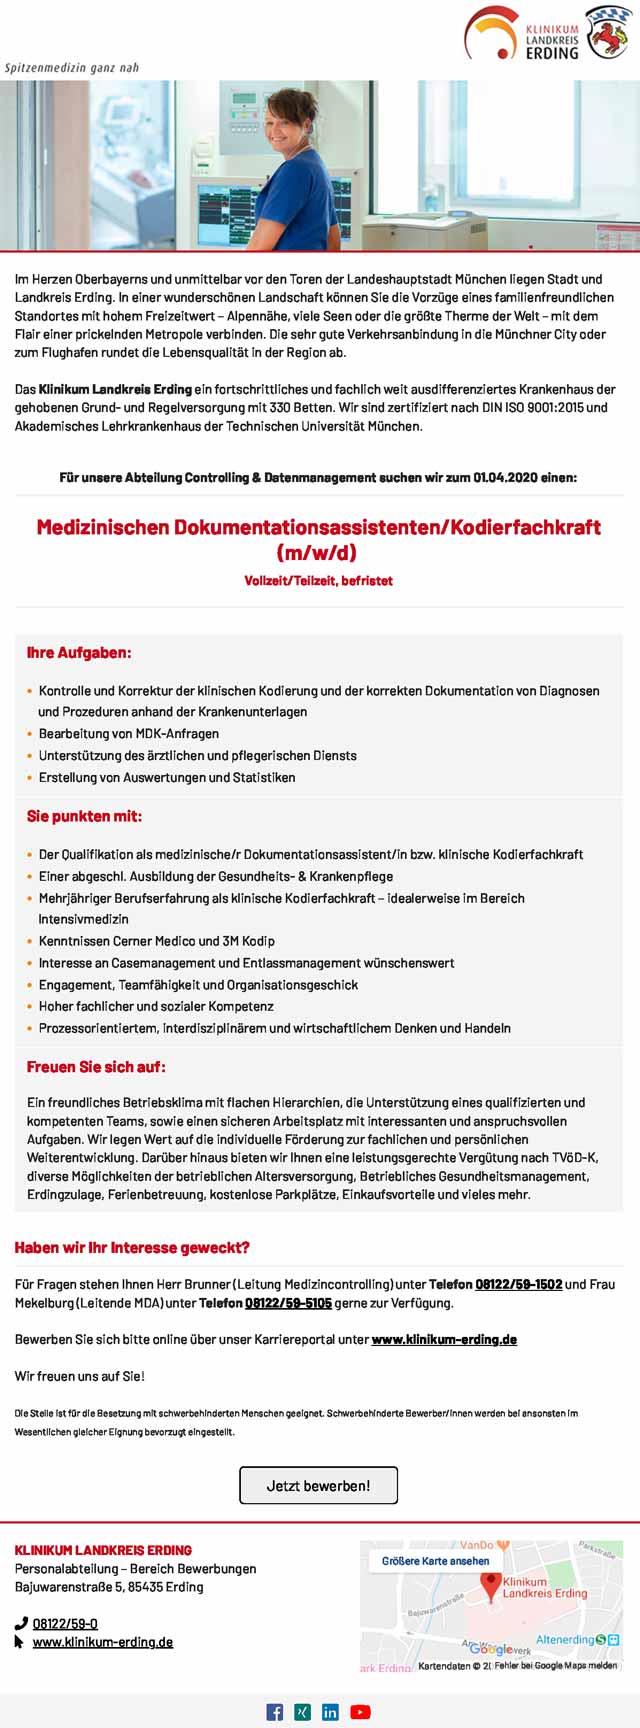 Klinikum Landkreis Erding: Medizinischer Dokumentationsassistent / Kodierfachkraft (m/w/d)